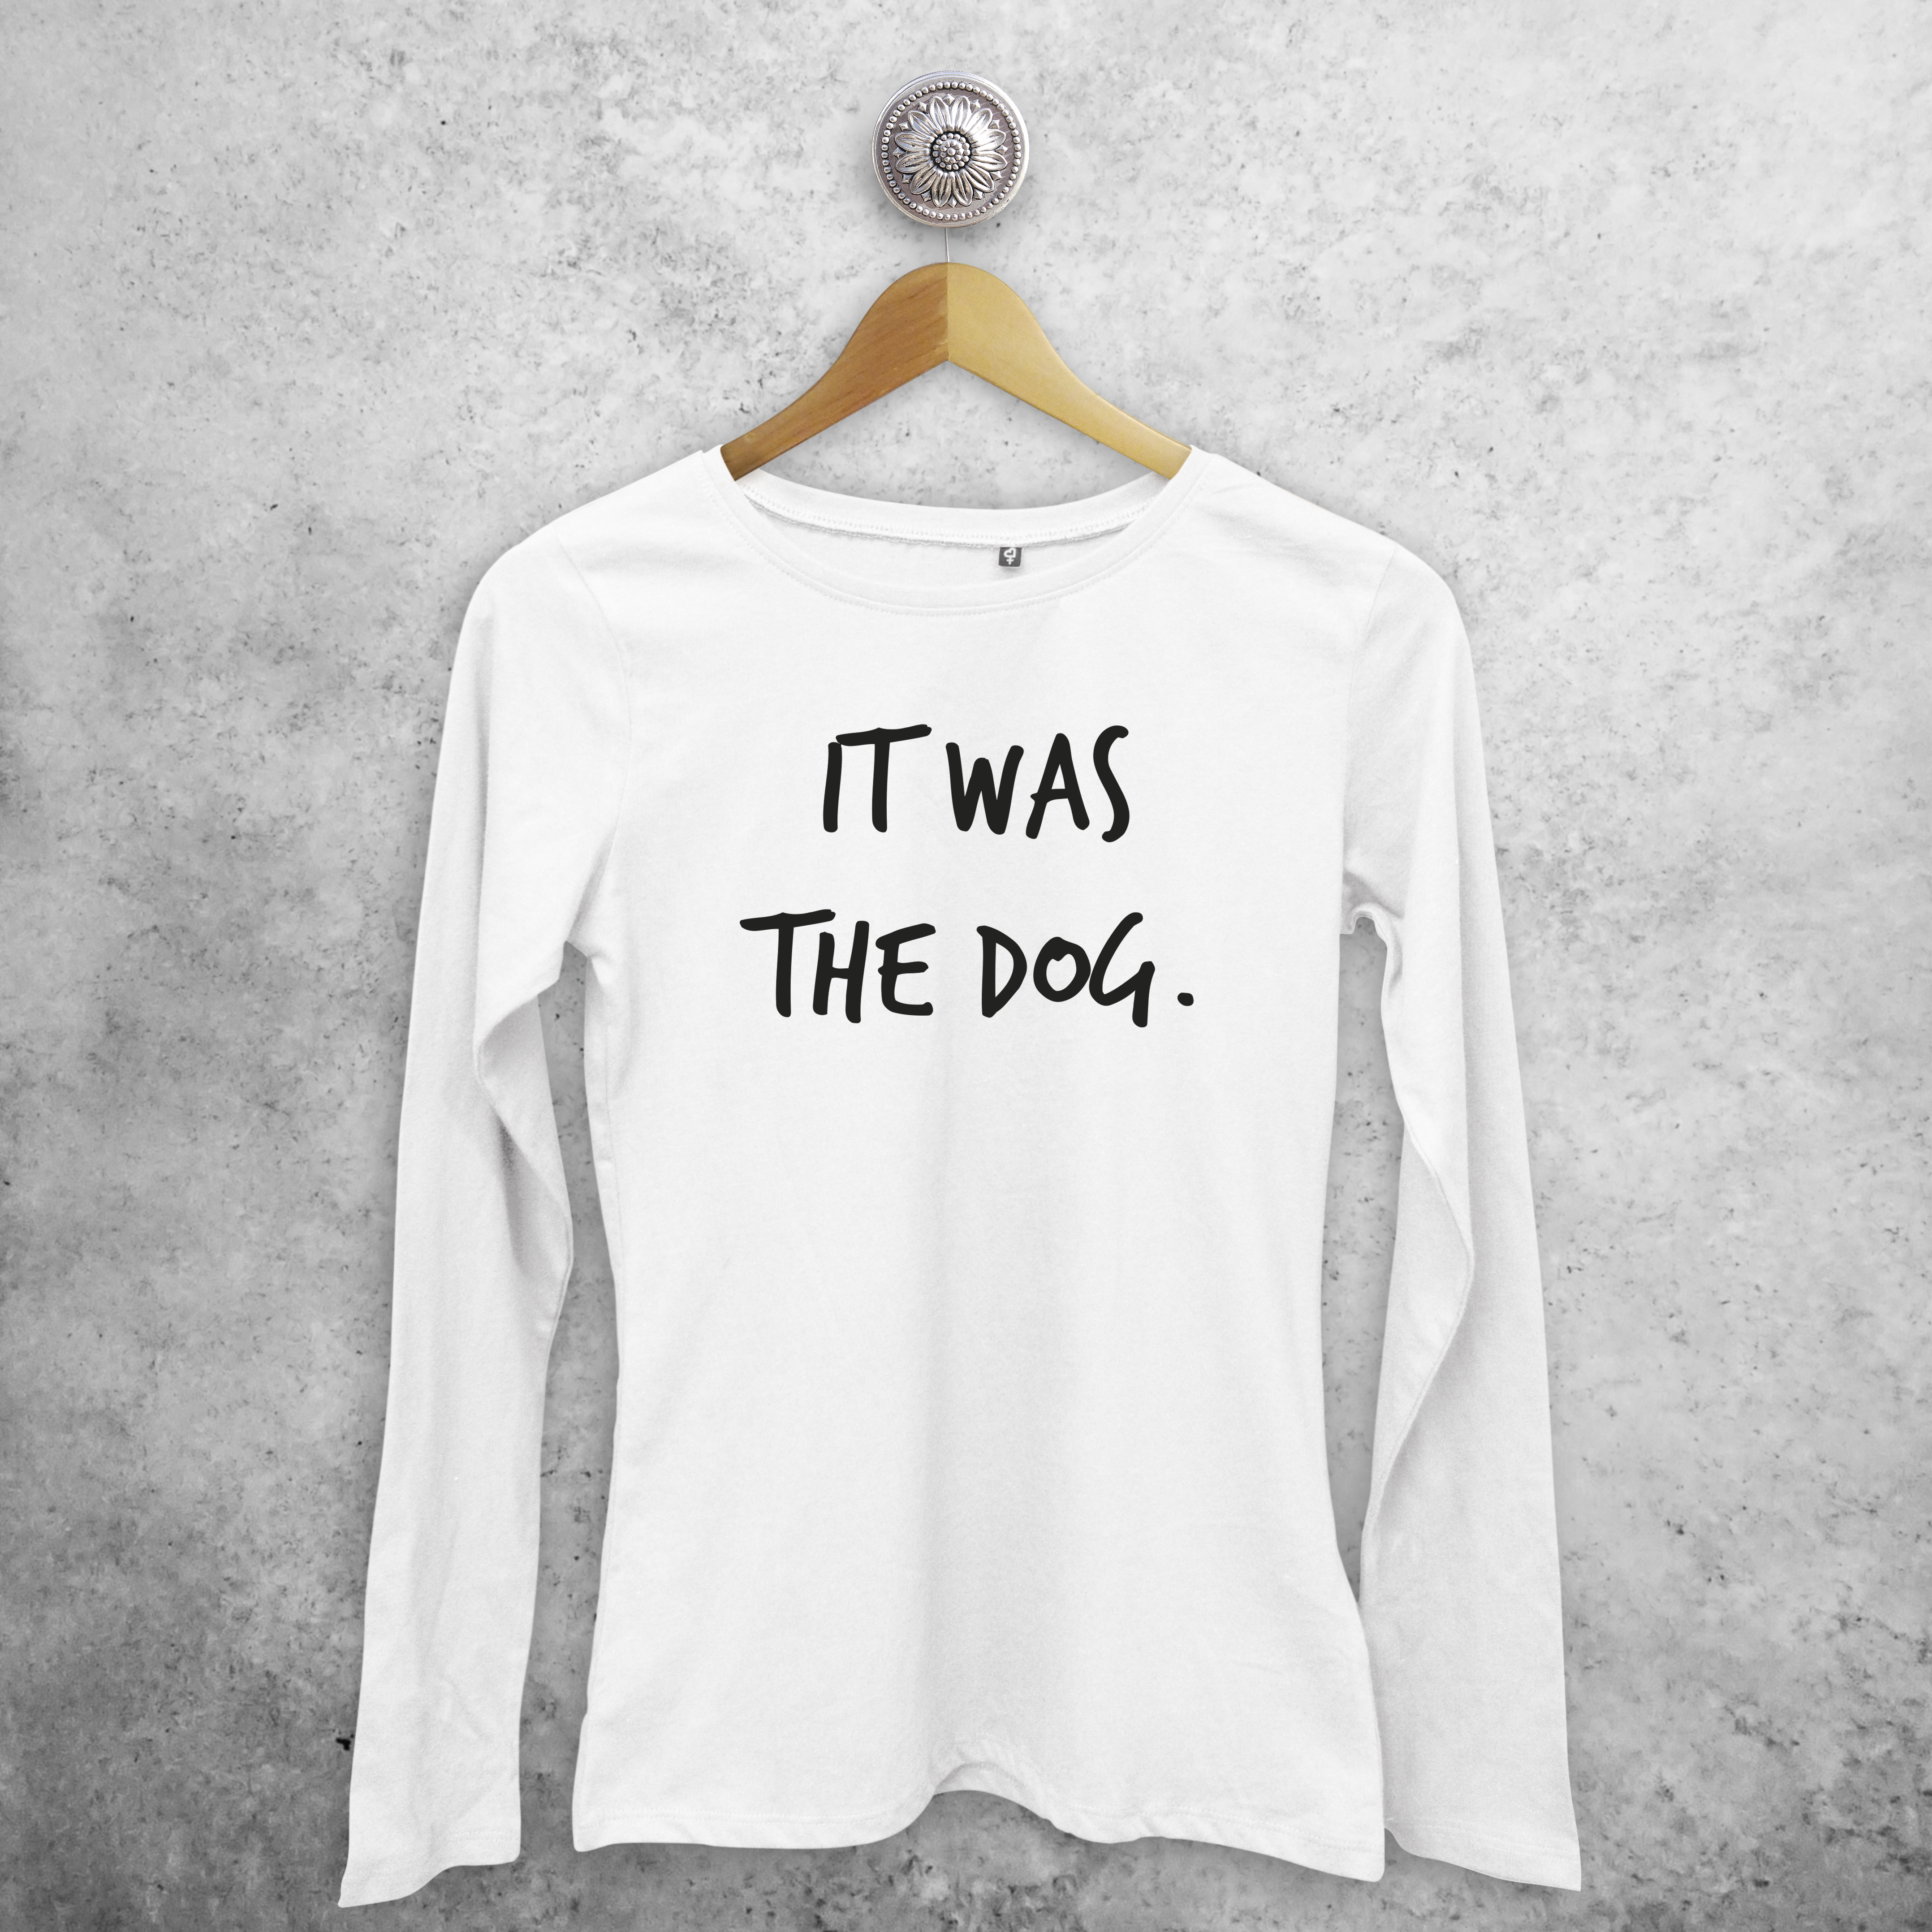 'It was the dog' adult longsleeve shirt